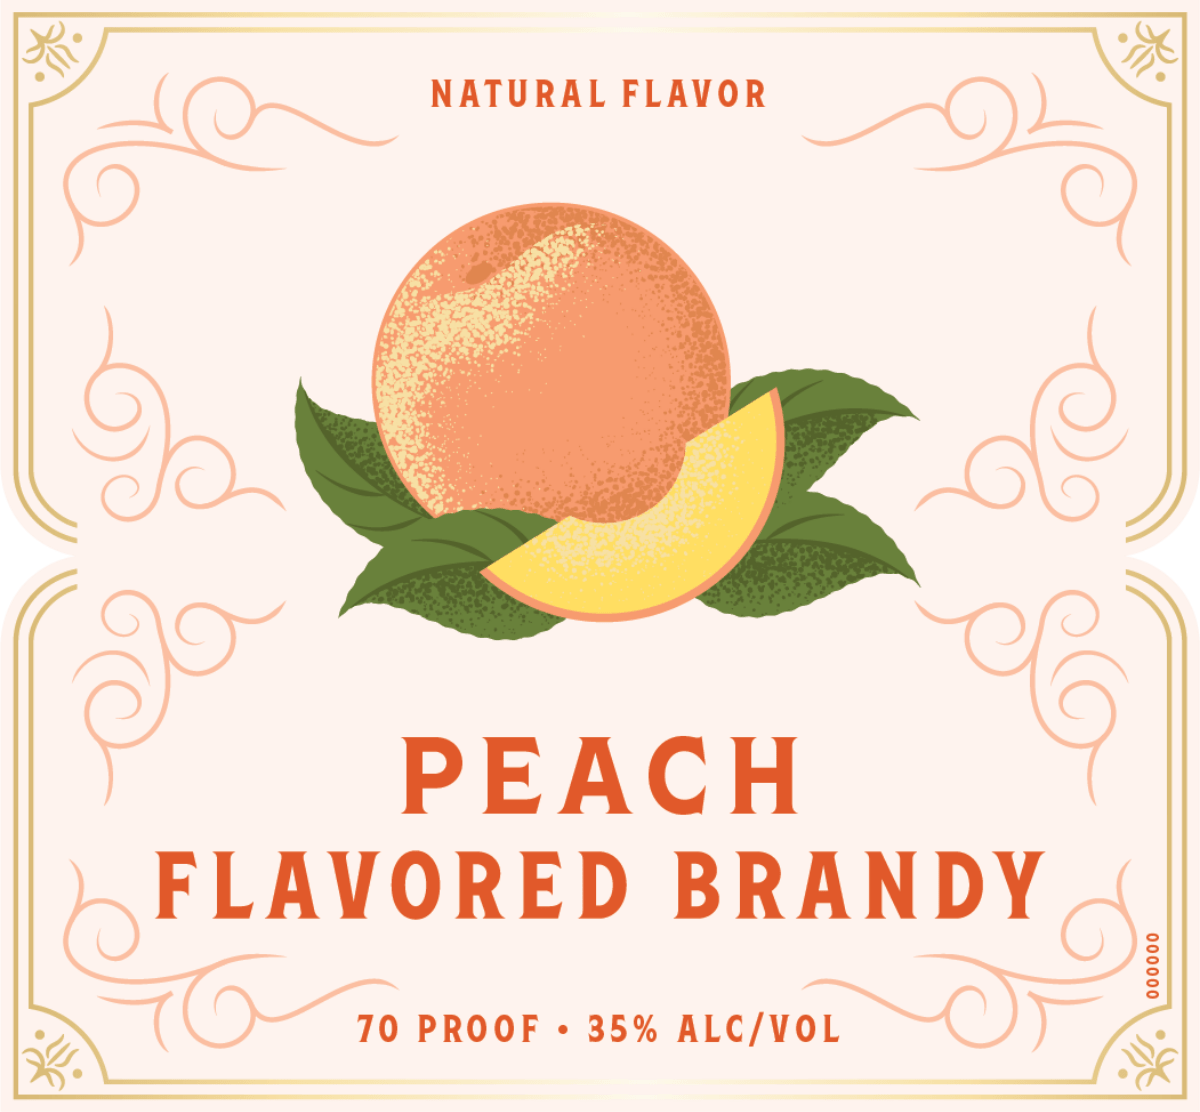 Leroux® Peach Flavored Brandy